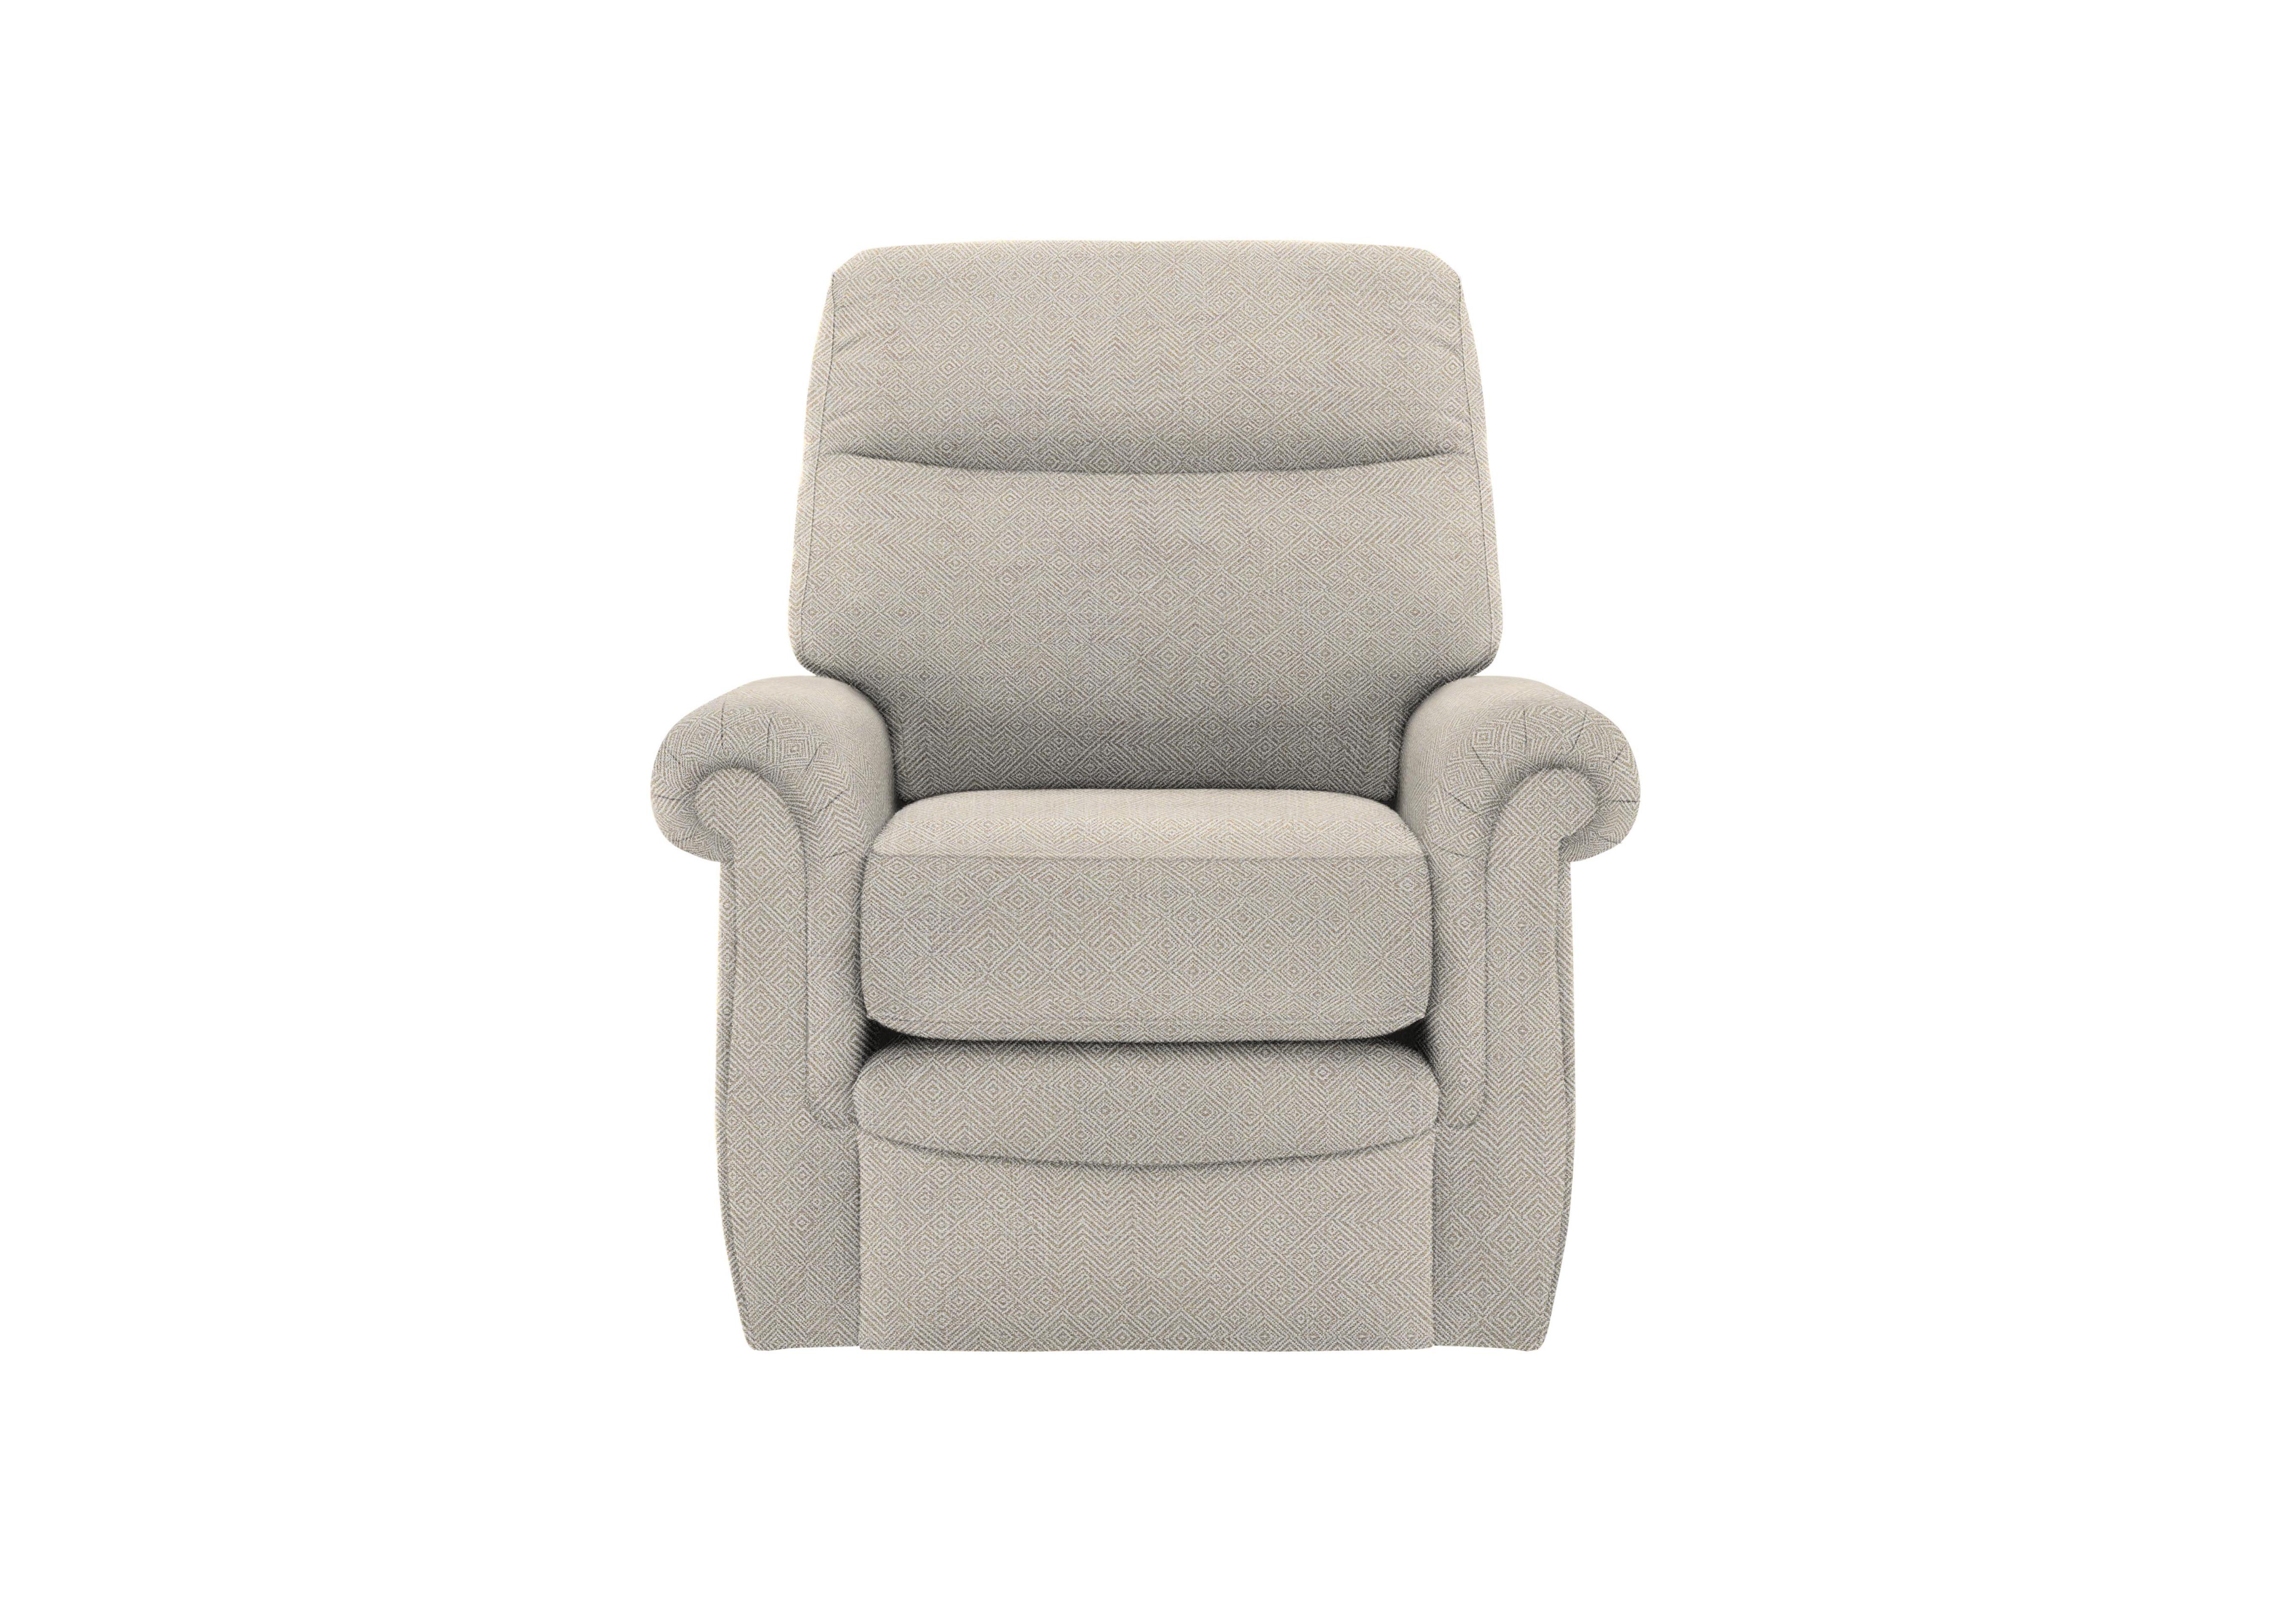 Avon Fabric Armchair in B011 Nebular Blush on Furniture Village